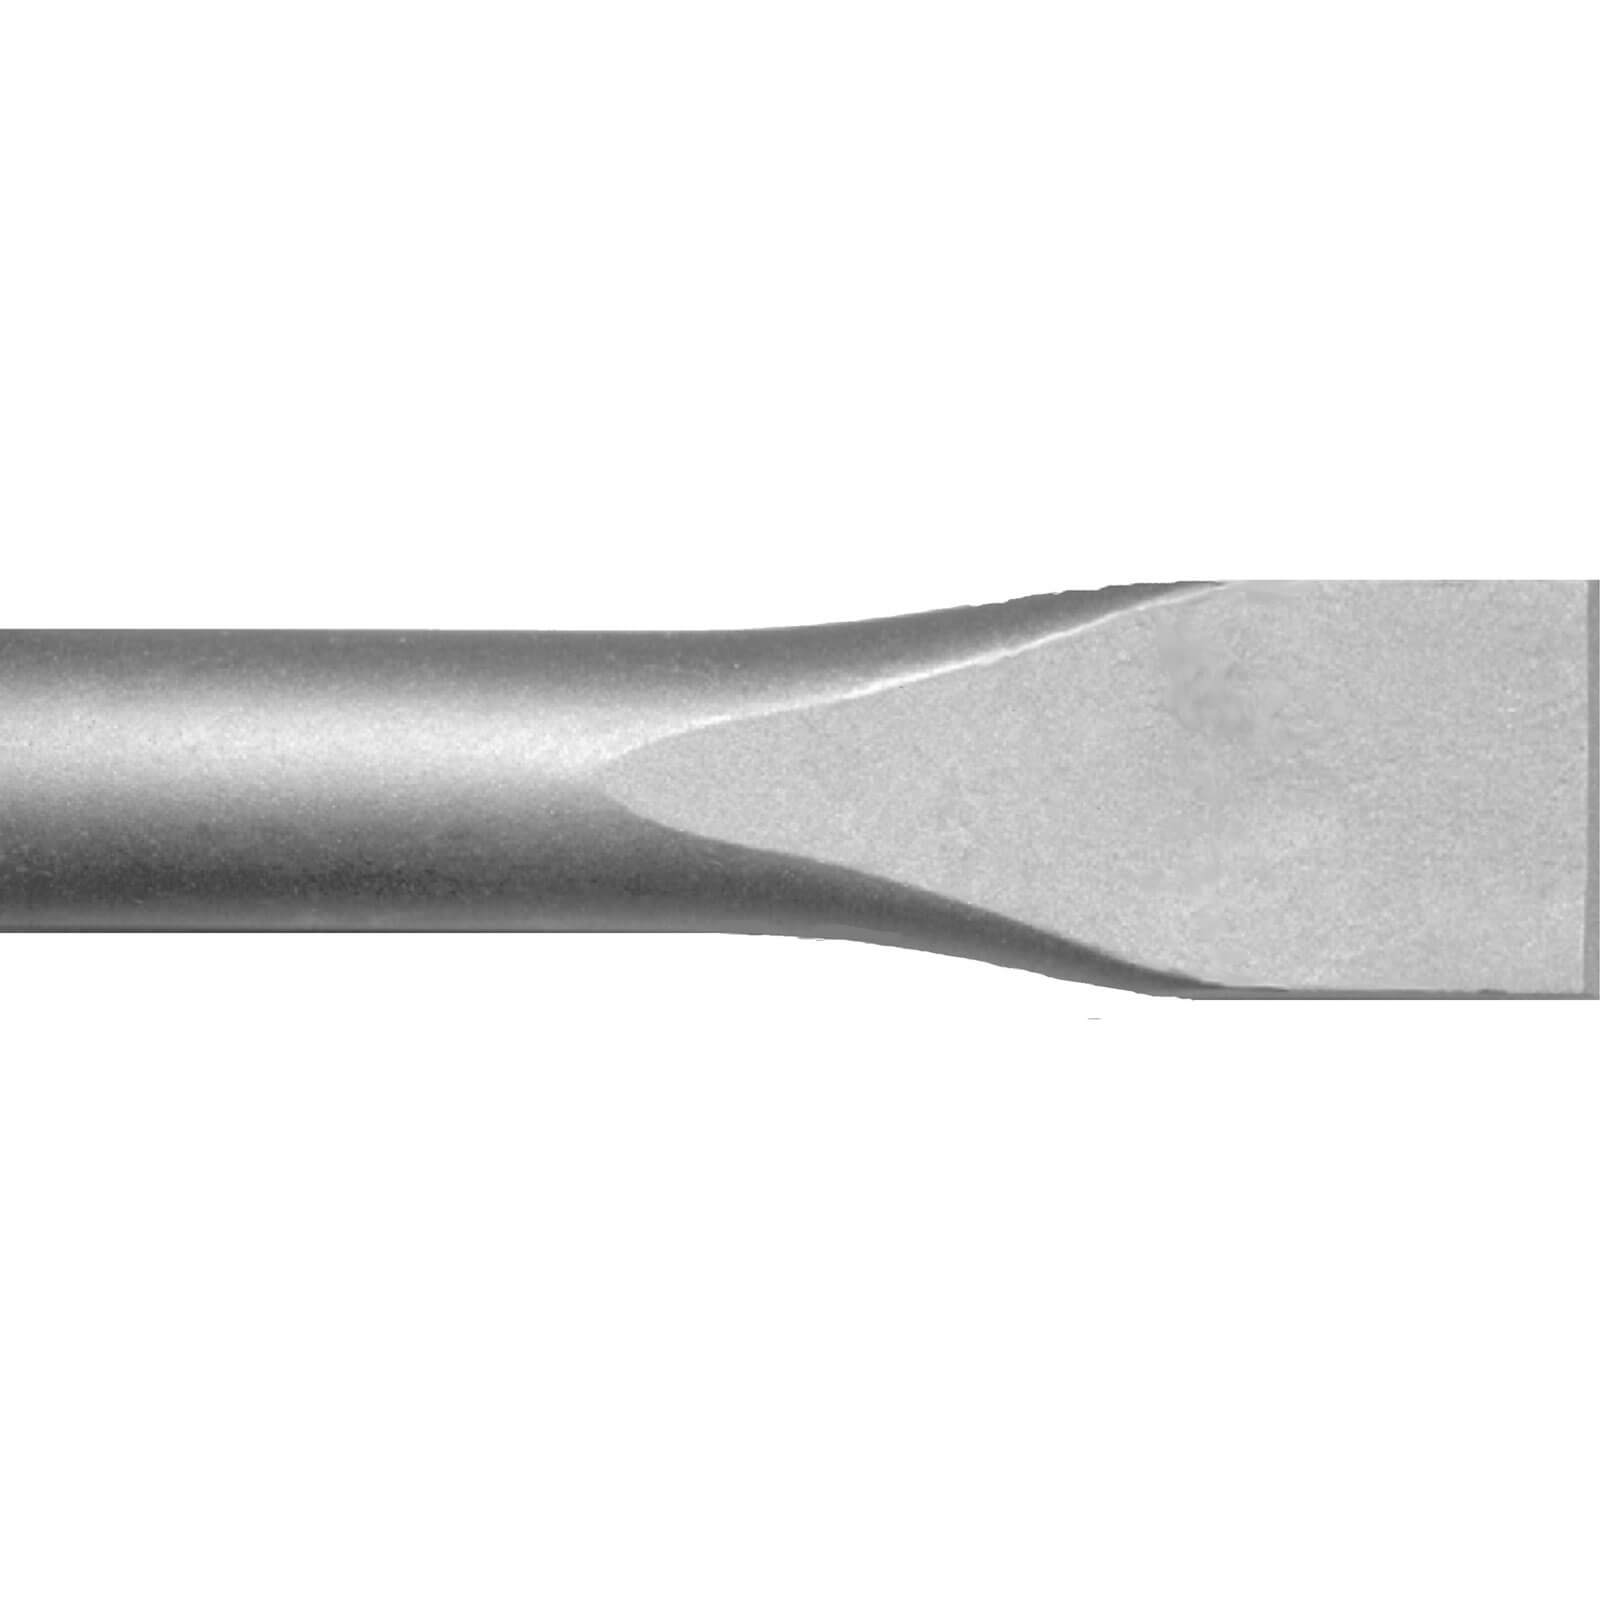 Image of Irwin Speedhammer SDS Max Flat Chisel Bit 25mm 400mm